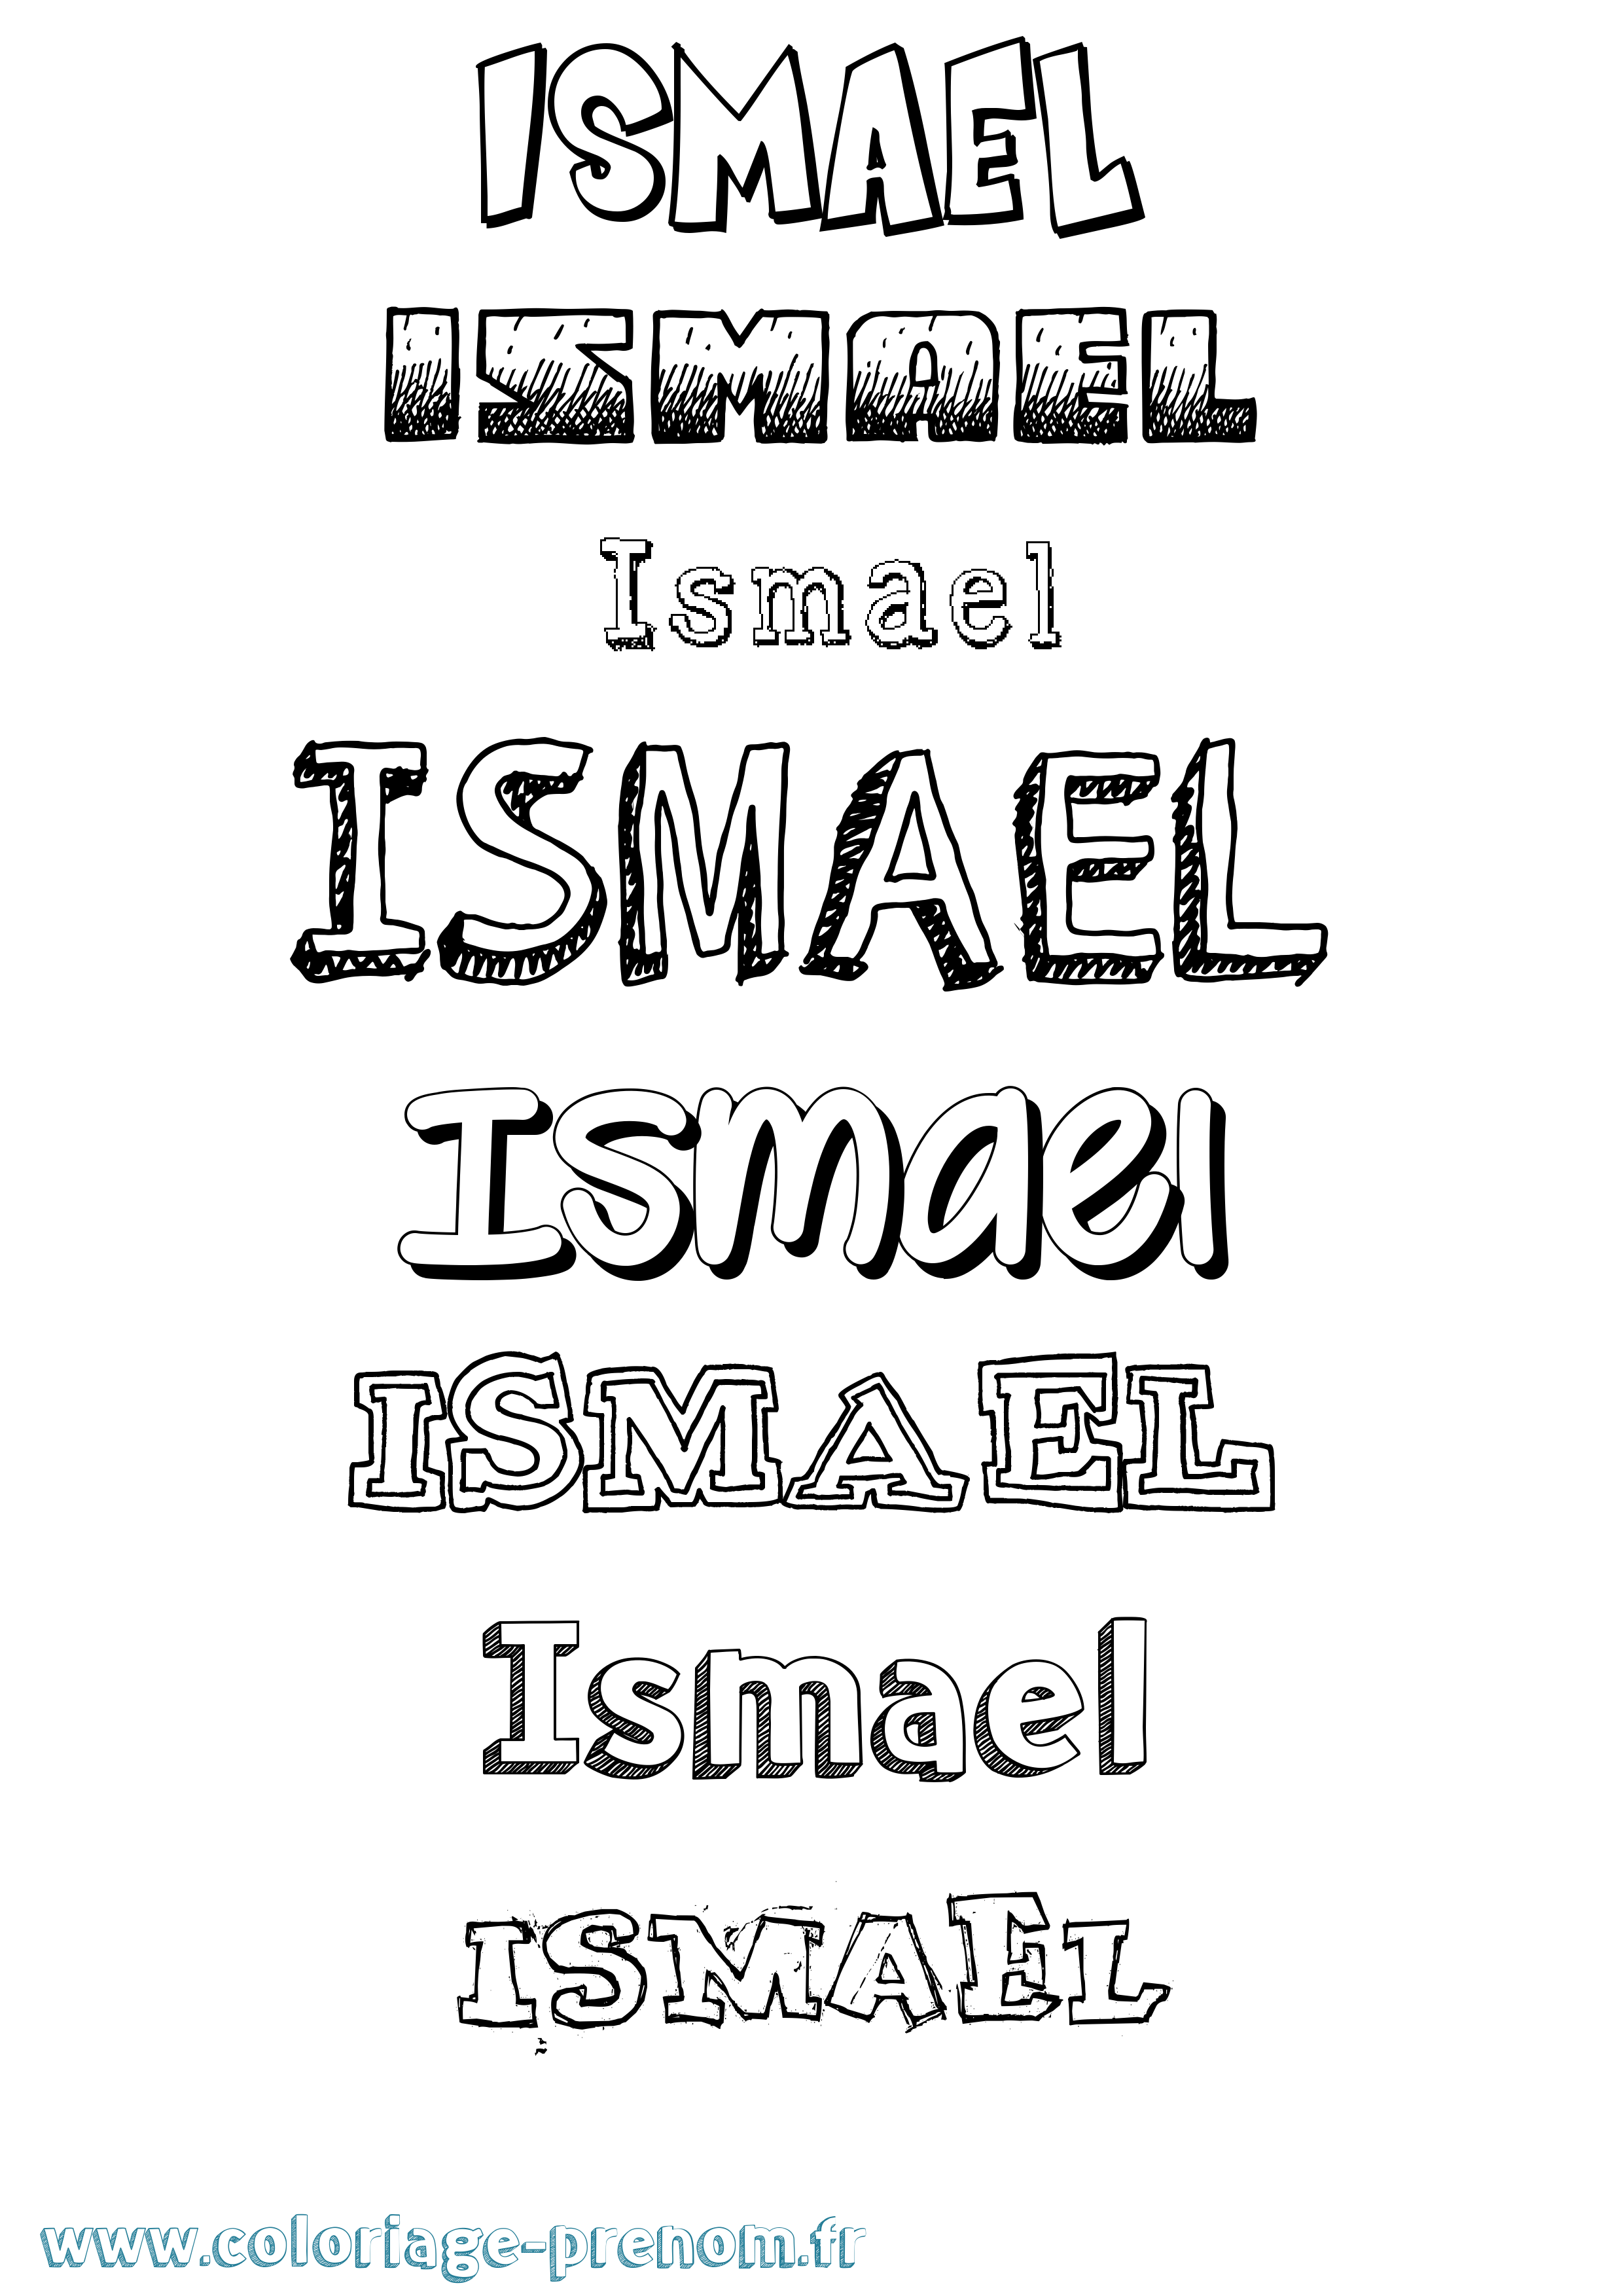 Coloriage prénom Ismael Dessiné